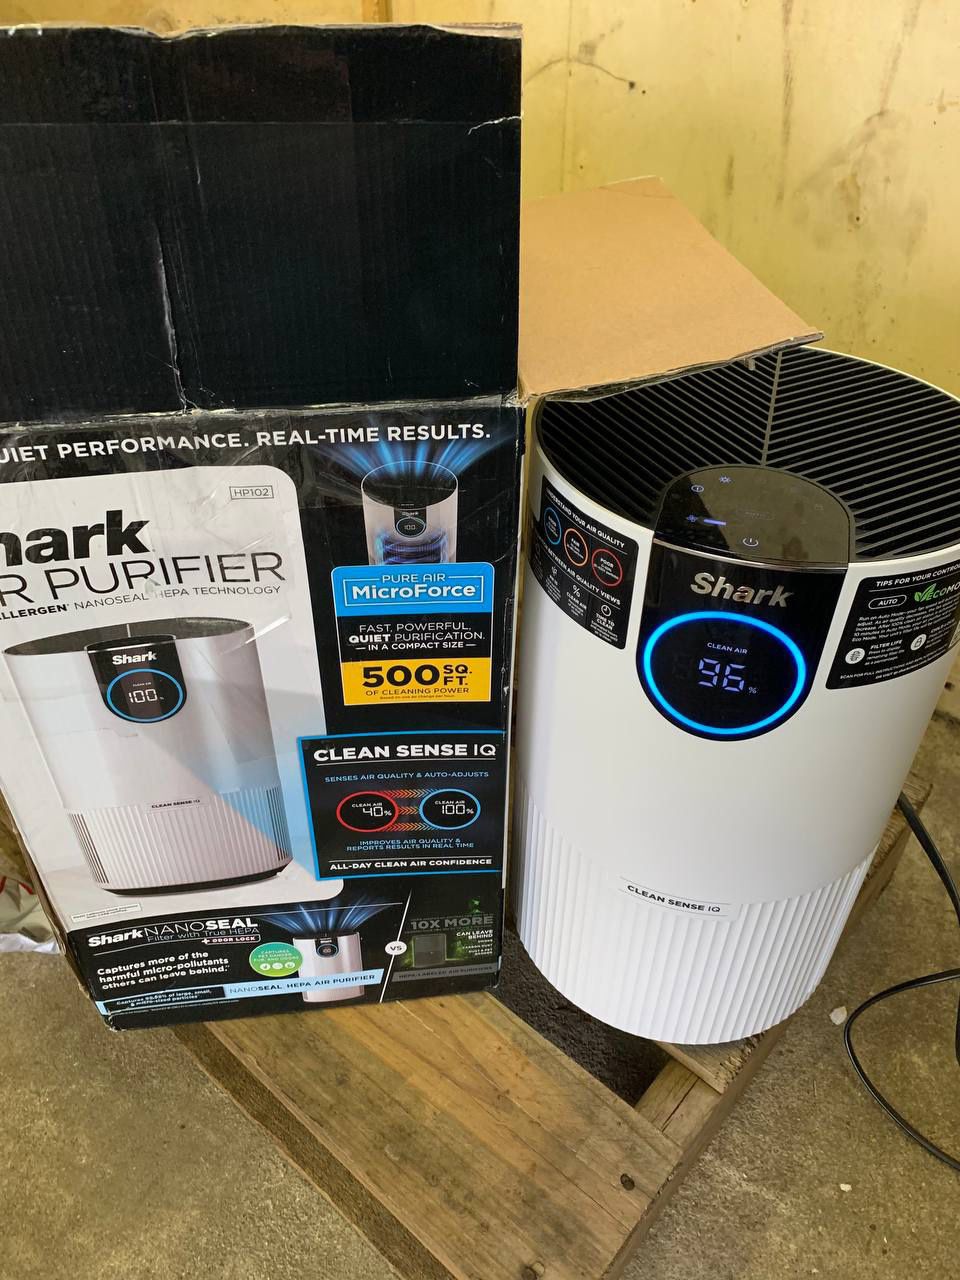 Shark - Clean Sense Air Purifier 500, Clean Sense IQ, NanoSeal True HEPA, 500 sq. ft., Filters 99.9% of allergens, Pro Odor Lock - White [HP102]